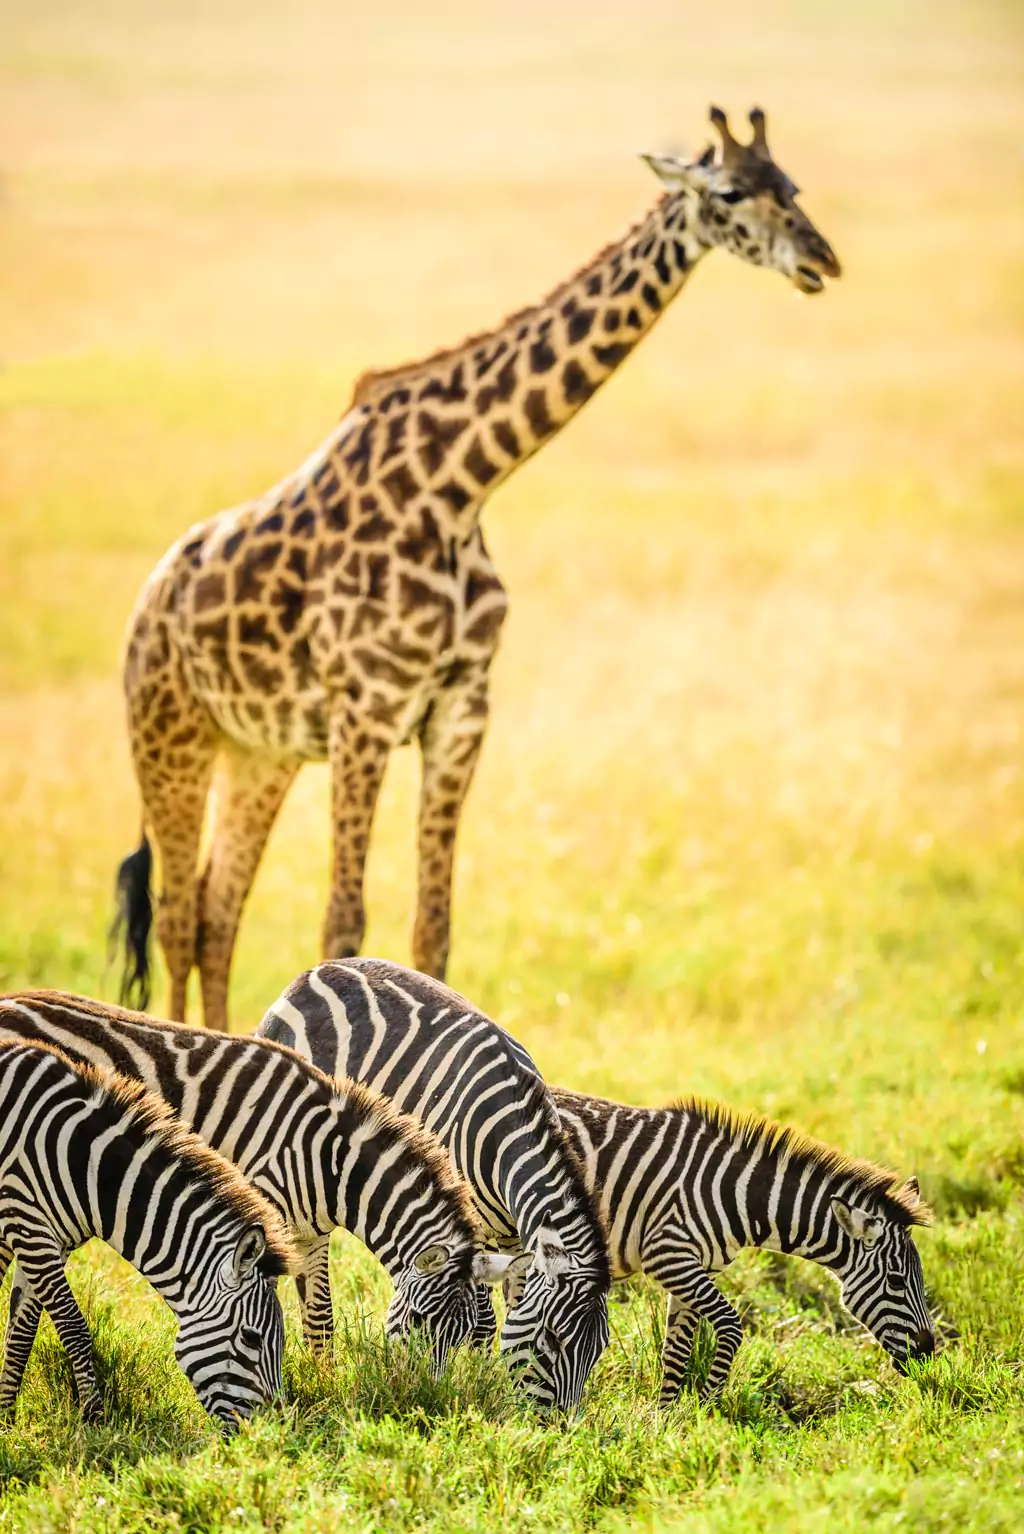 Giraffe and zebras together